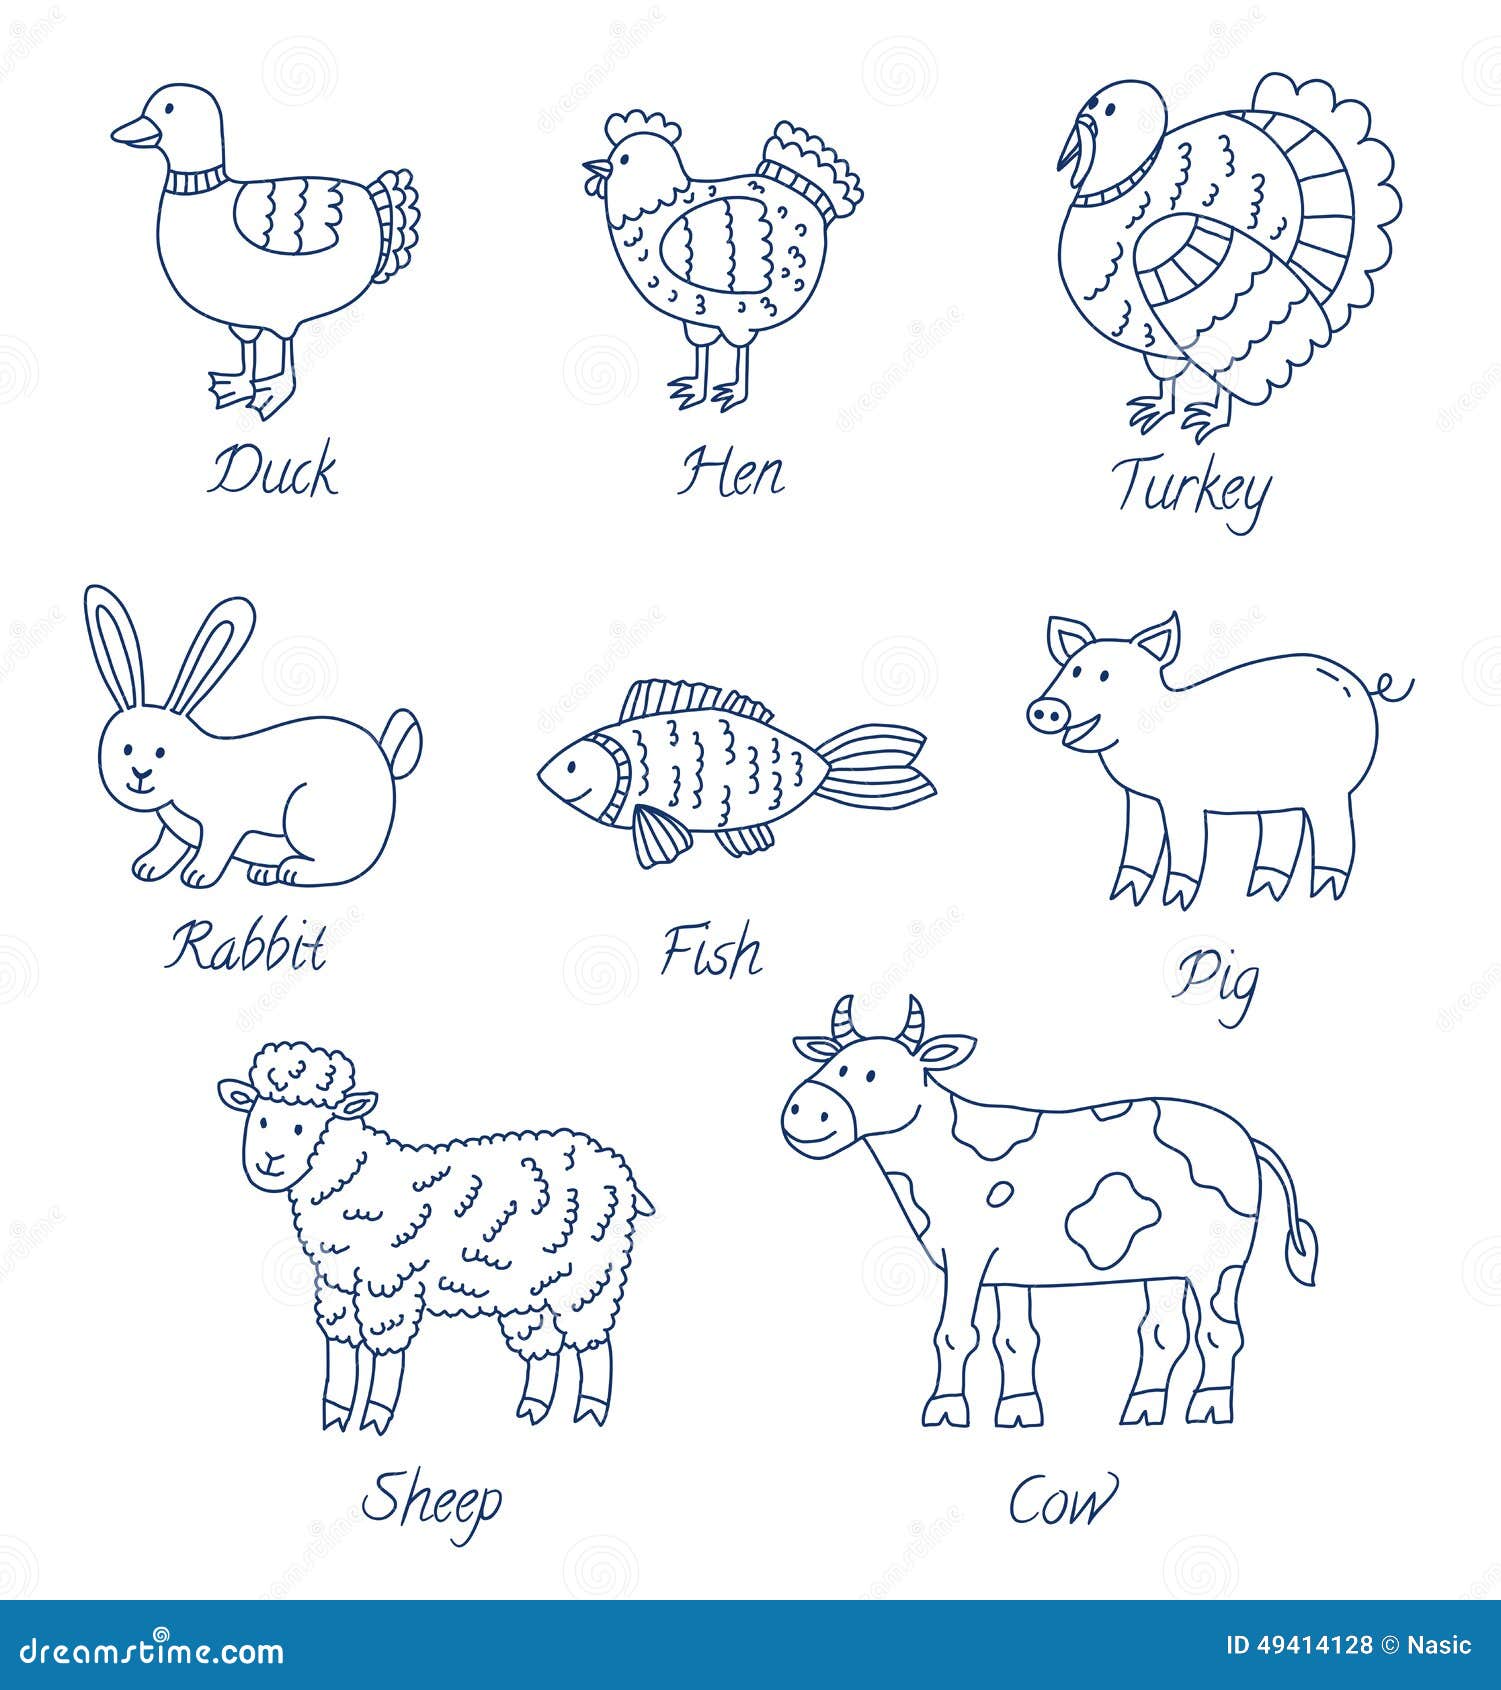 Meat animals cartoon set stock vector. Illustration of duck - 49414128